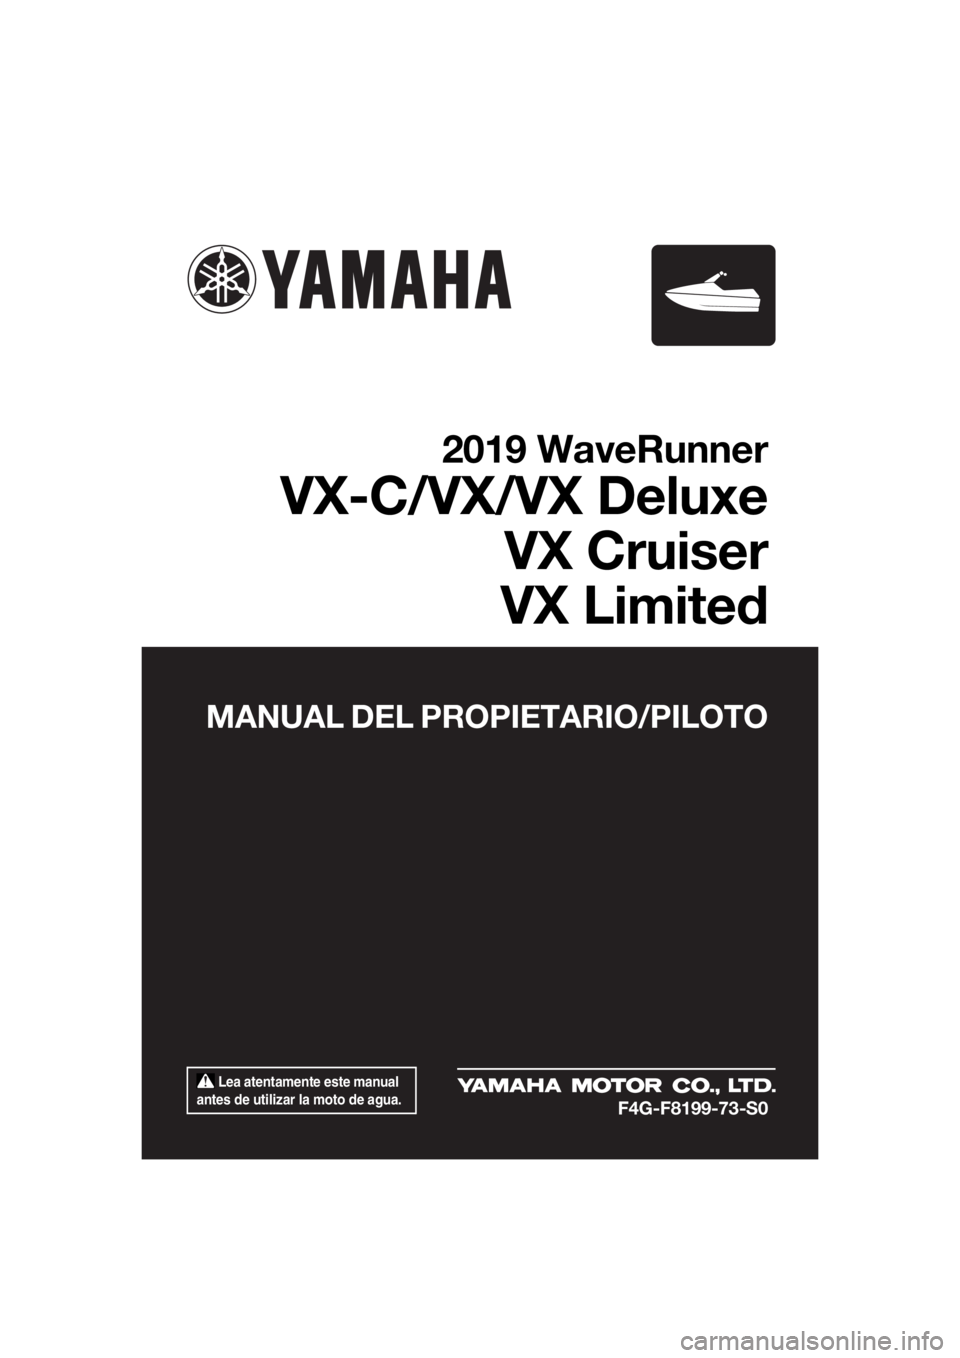 YAMAHA VX-C 2019  Manuale de Empleo (in Spanish)  Lea atentamente este manual 
antes de utilizar la moto de agua.
MANUAL DEL PROPIETARIO/PILOTO
2019 WaveRunner
VX-C/VX/VX Deluxe
VX Cruiser
VX Limited
F4G-F8199-73-S0
UF4G73S0.book  Page 1  Thursday, 